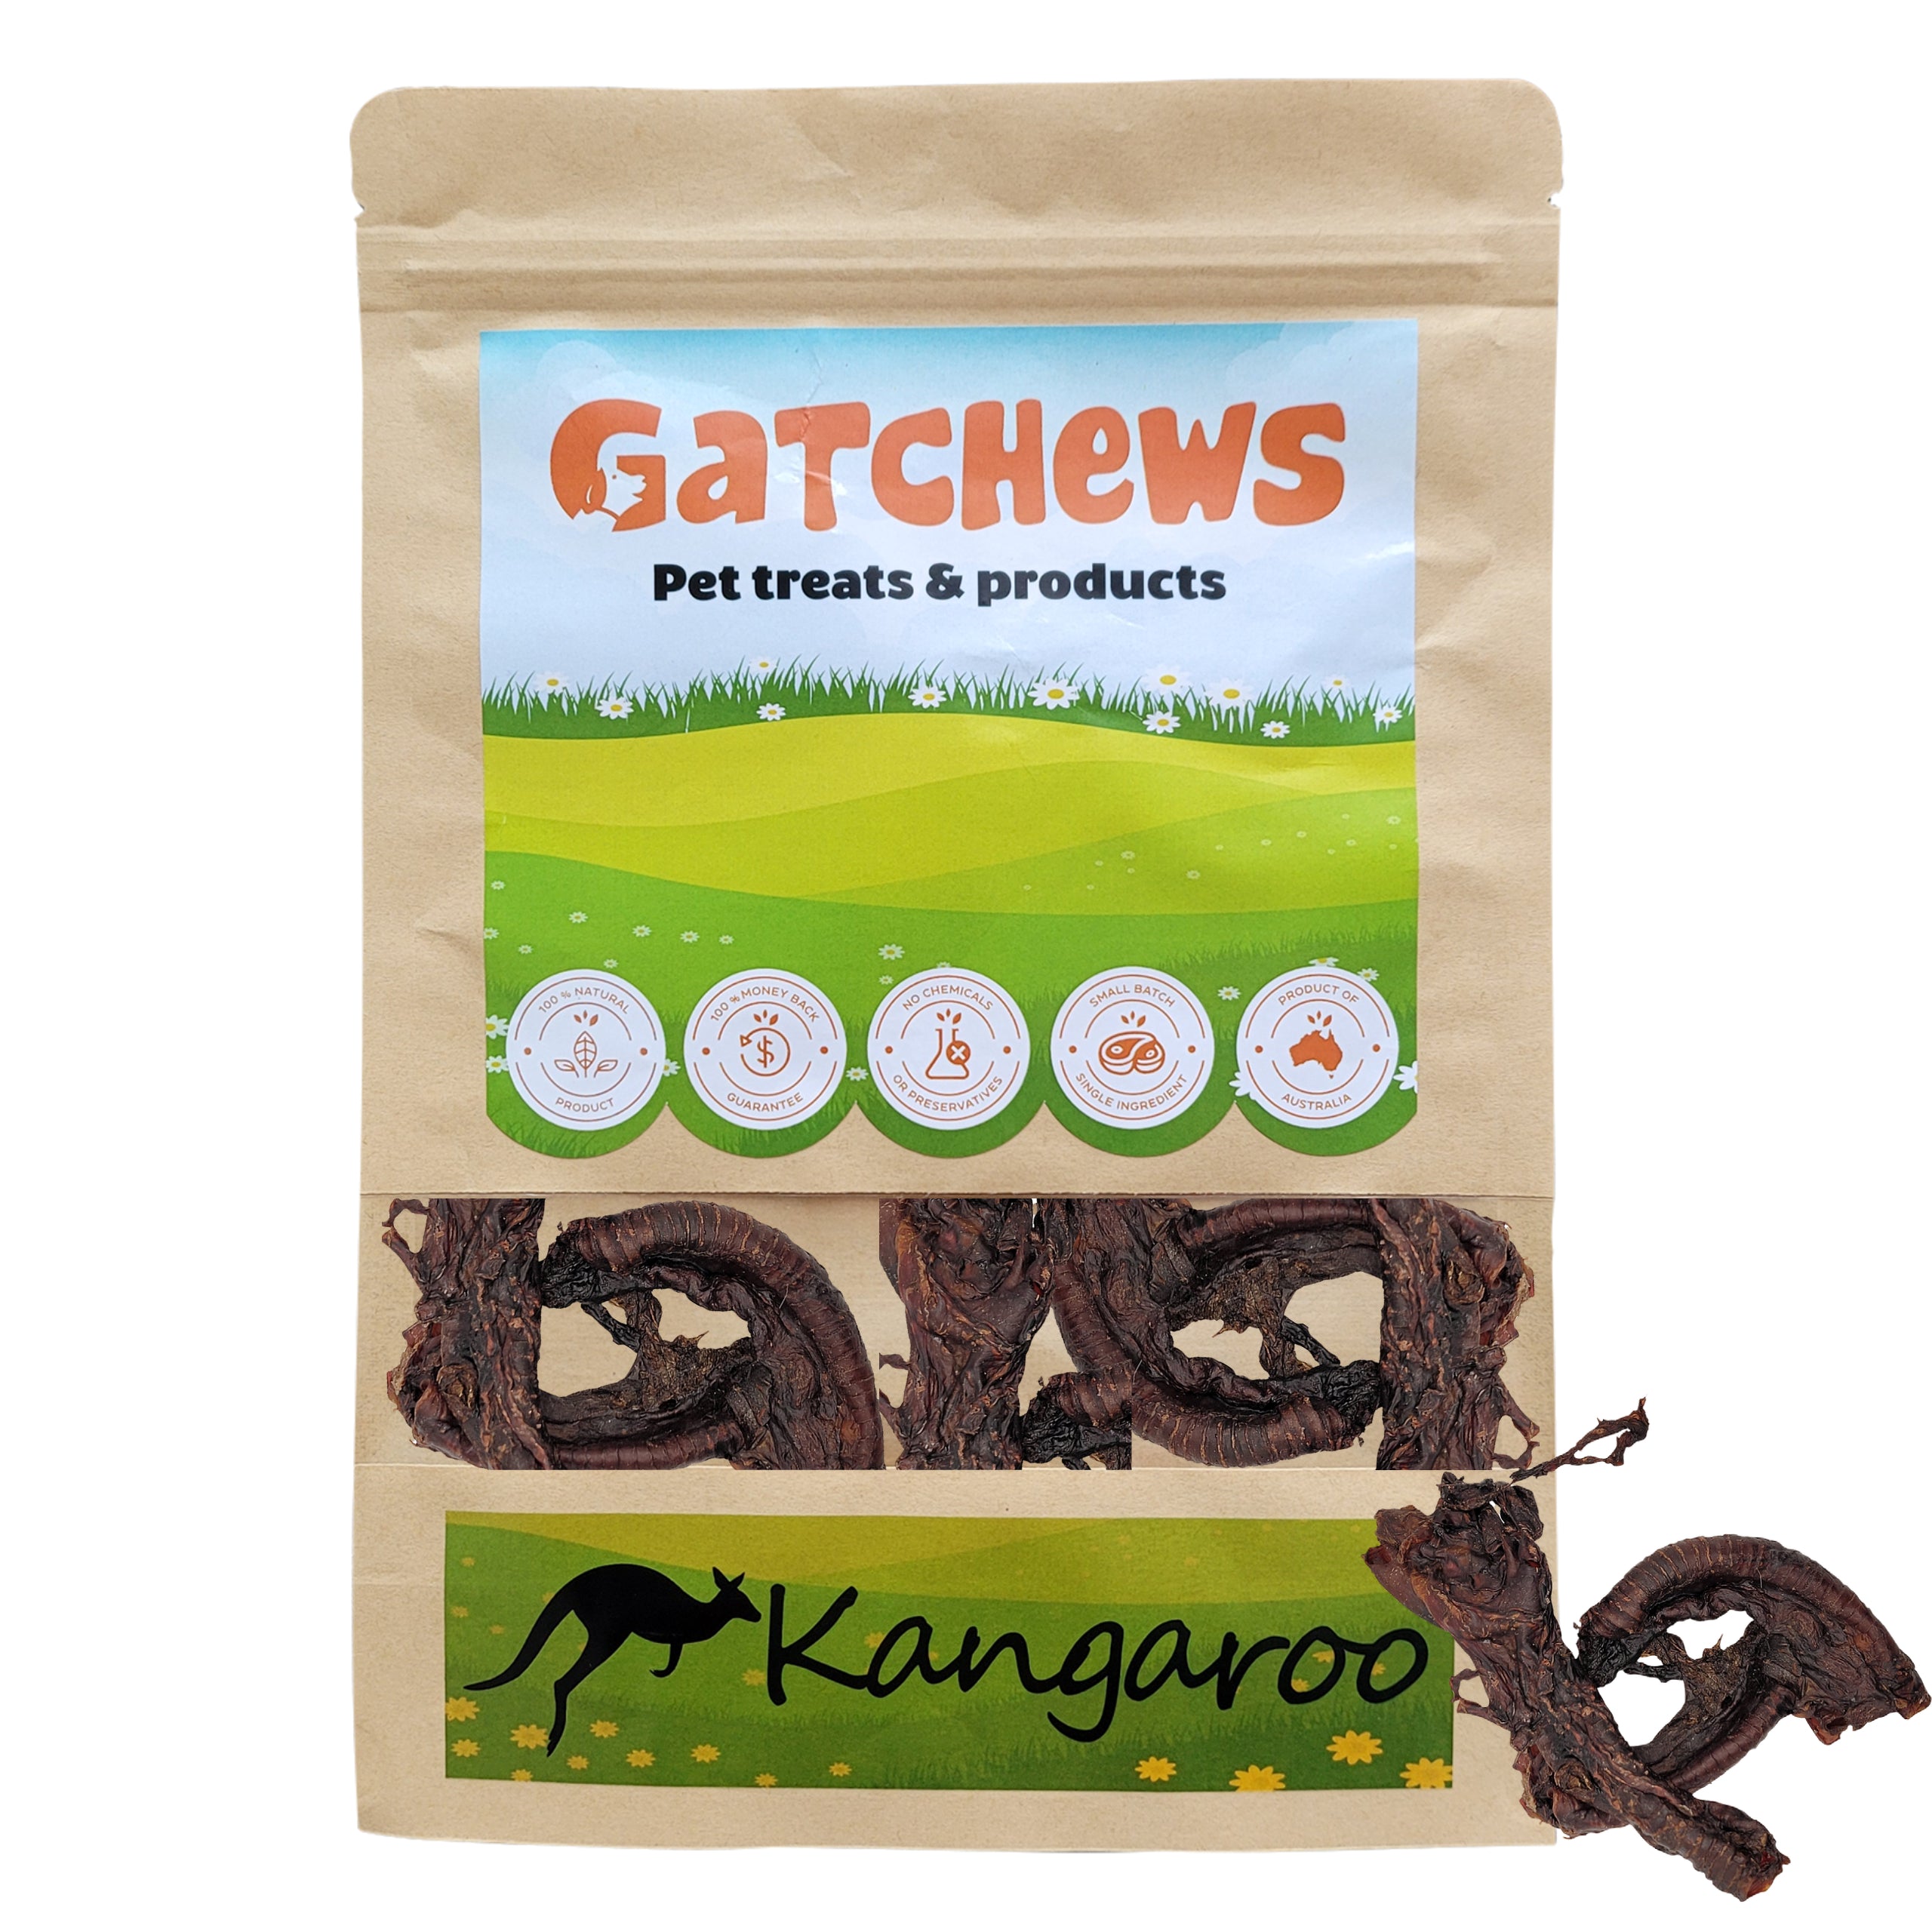 Gatchews Happy Town Pets Kangaroo trachea chews & treats package (6610140233889)